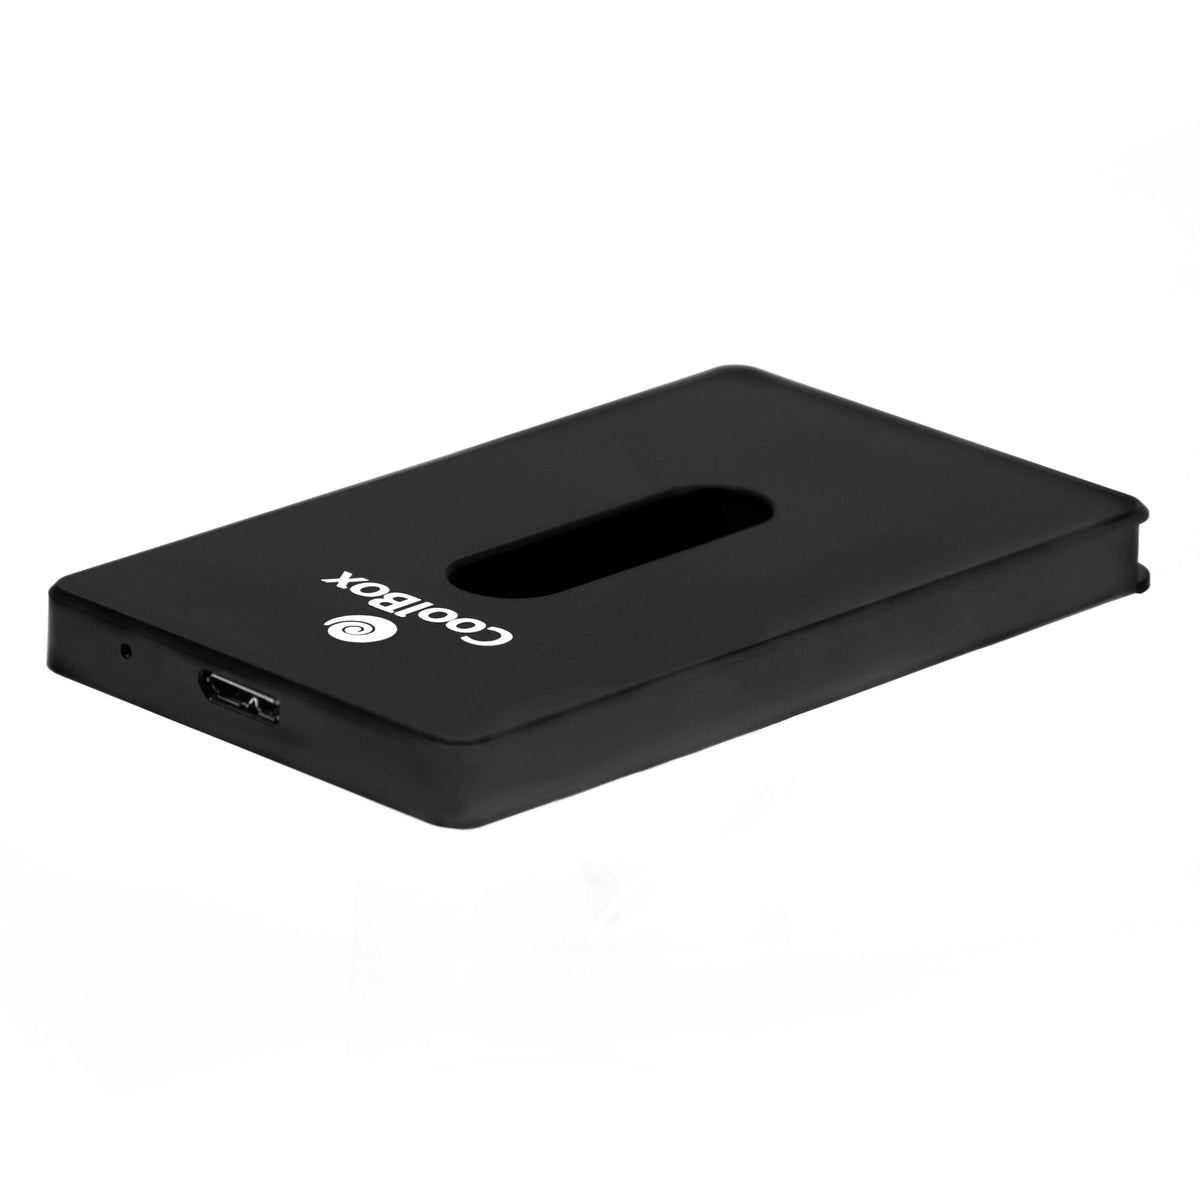 Caixa p/ disco externo 2.5 7mm CoolBox S-2533  SLOT-IN USB 3.0 Black